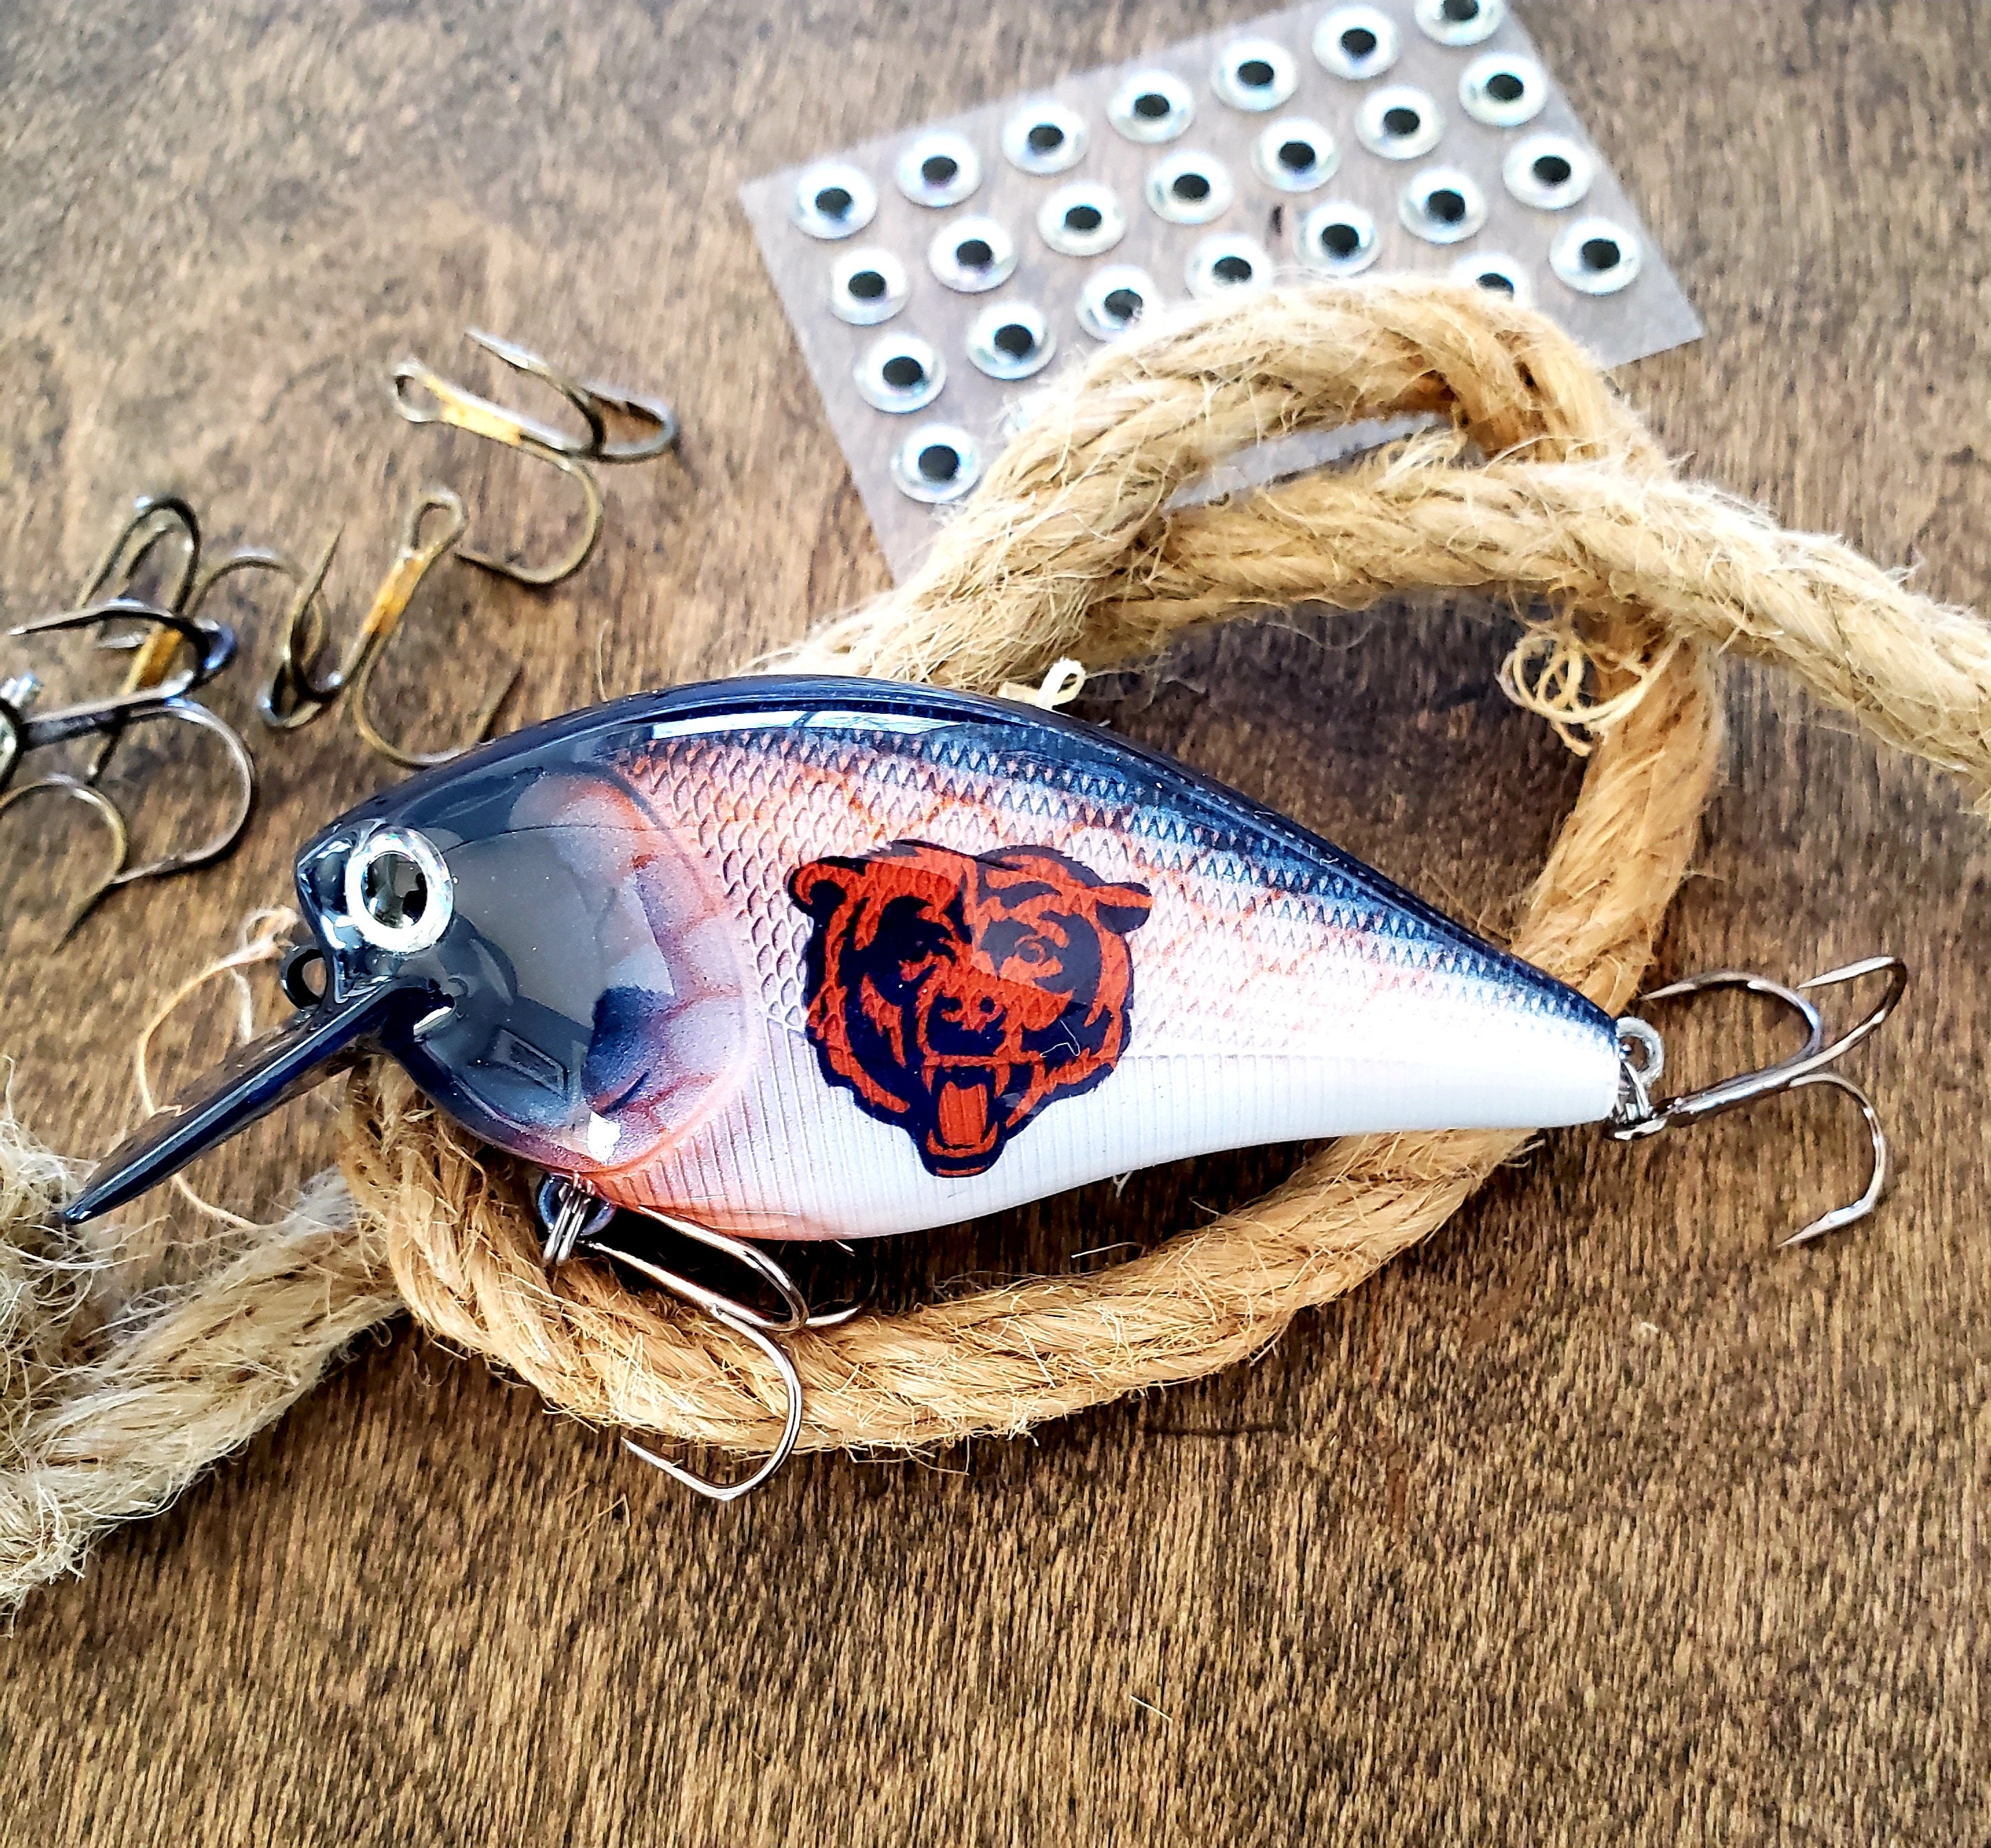 Custom Fishing Lures Make Great Fishing Gifts for Any Fisherman